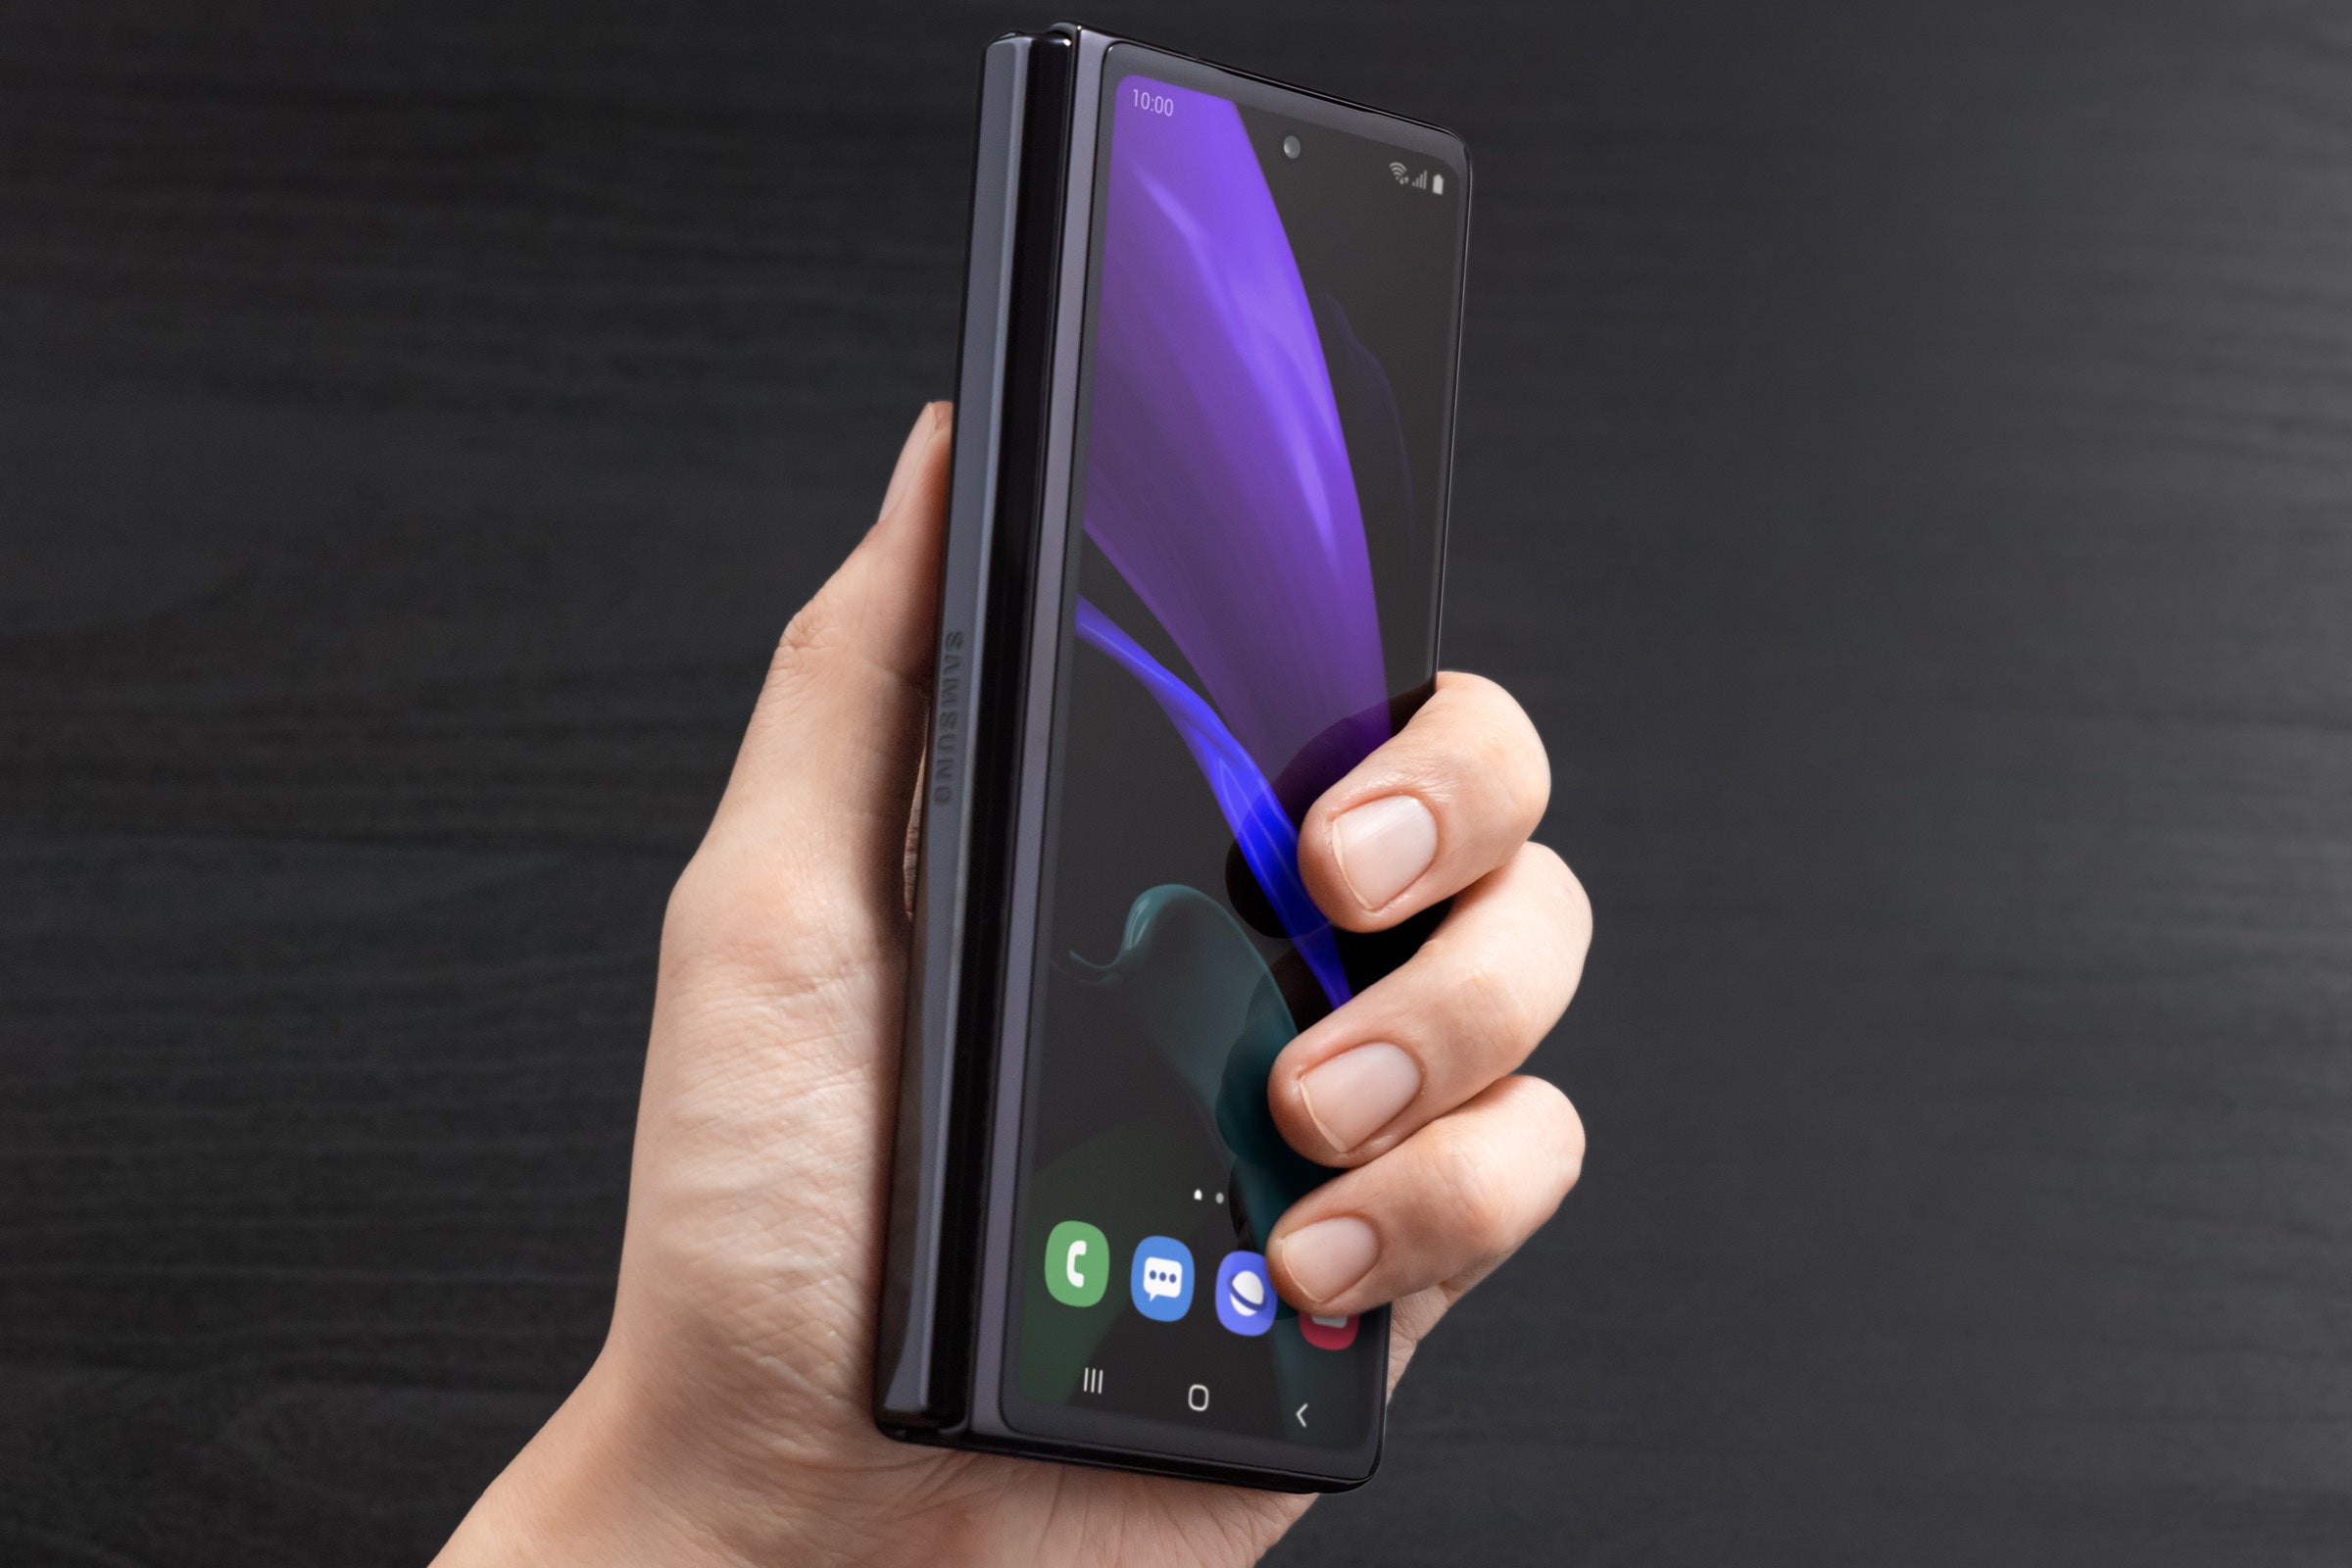 Samsung Galaxy Z Fold 2: Killer specs in search of killer